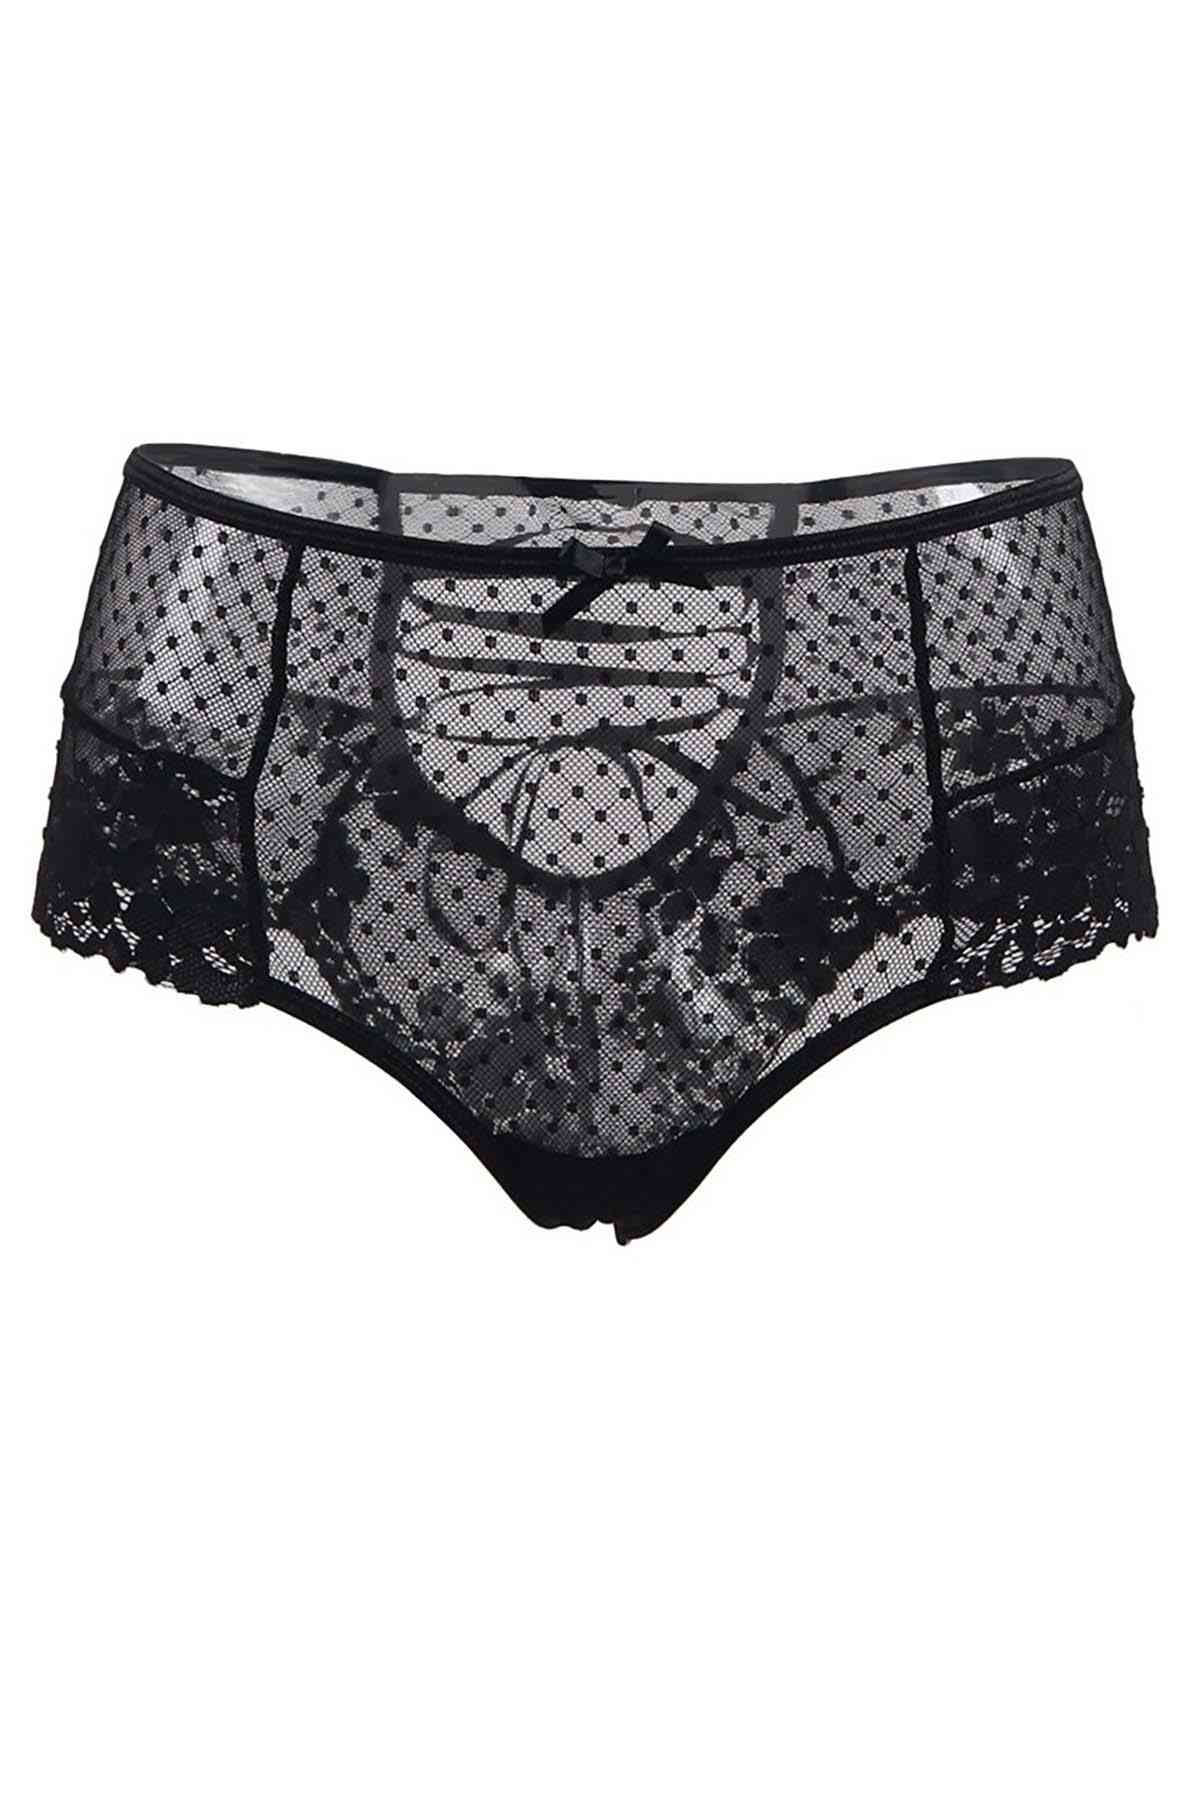 Black Lace Panties Women Sexy Lingerie Exotic Panties